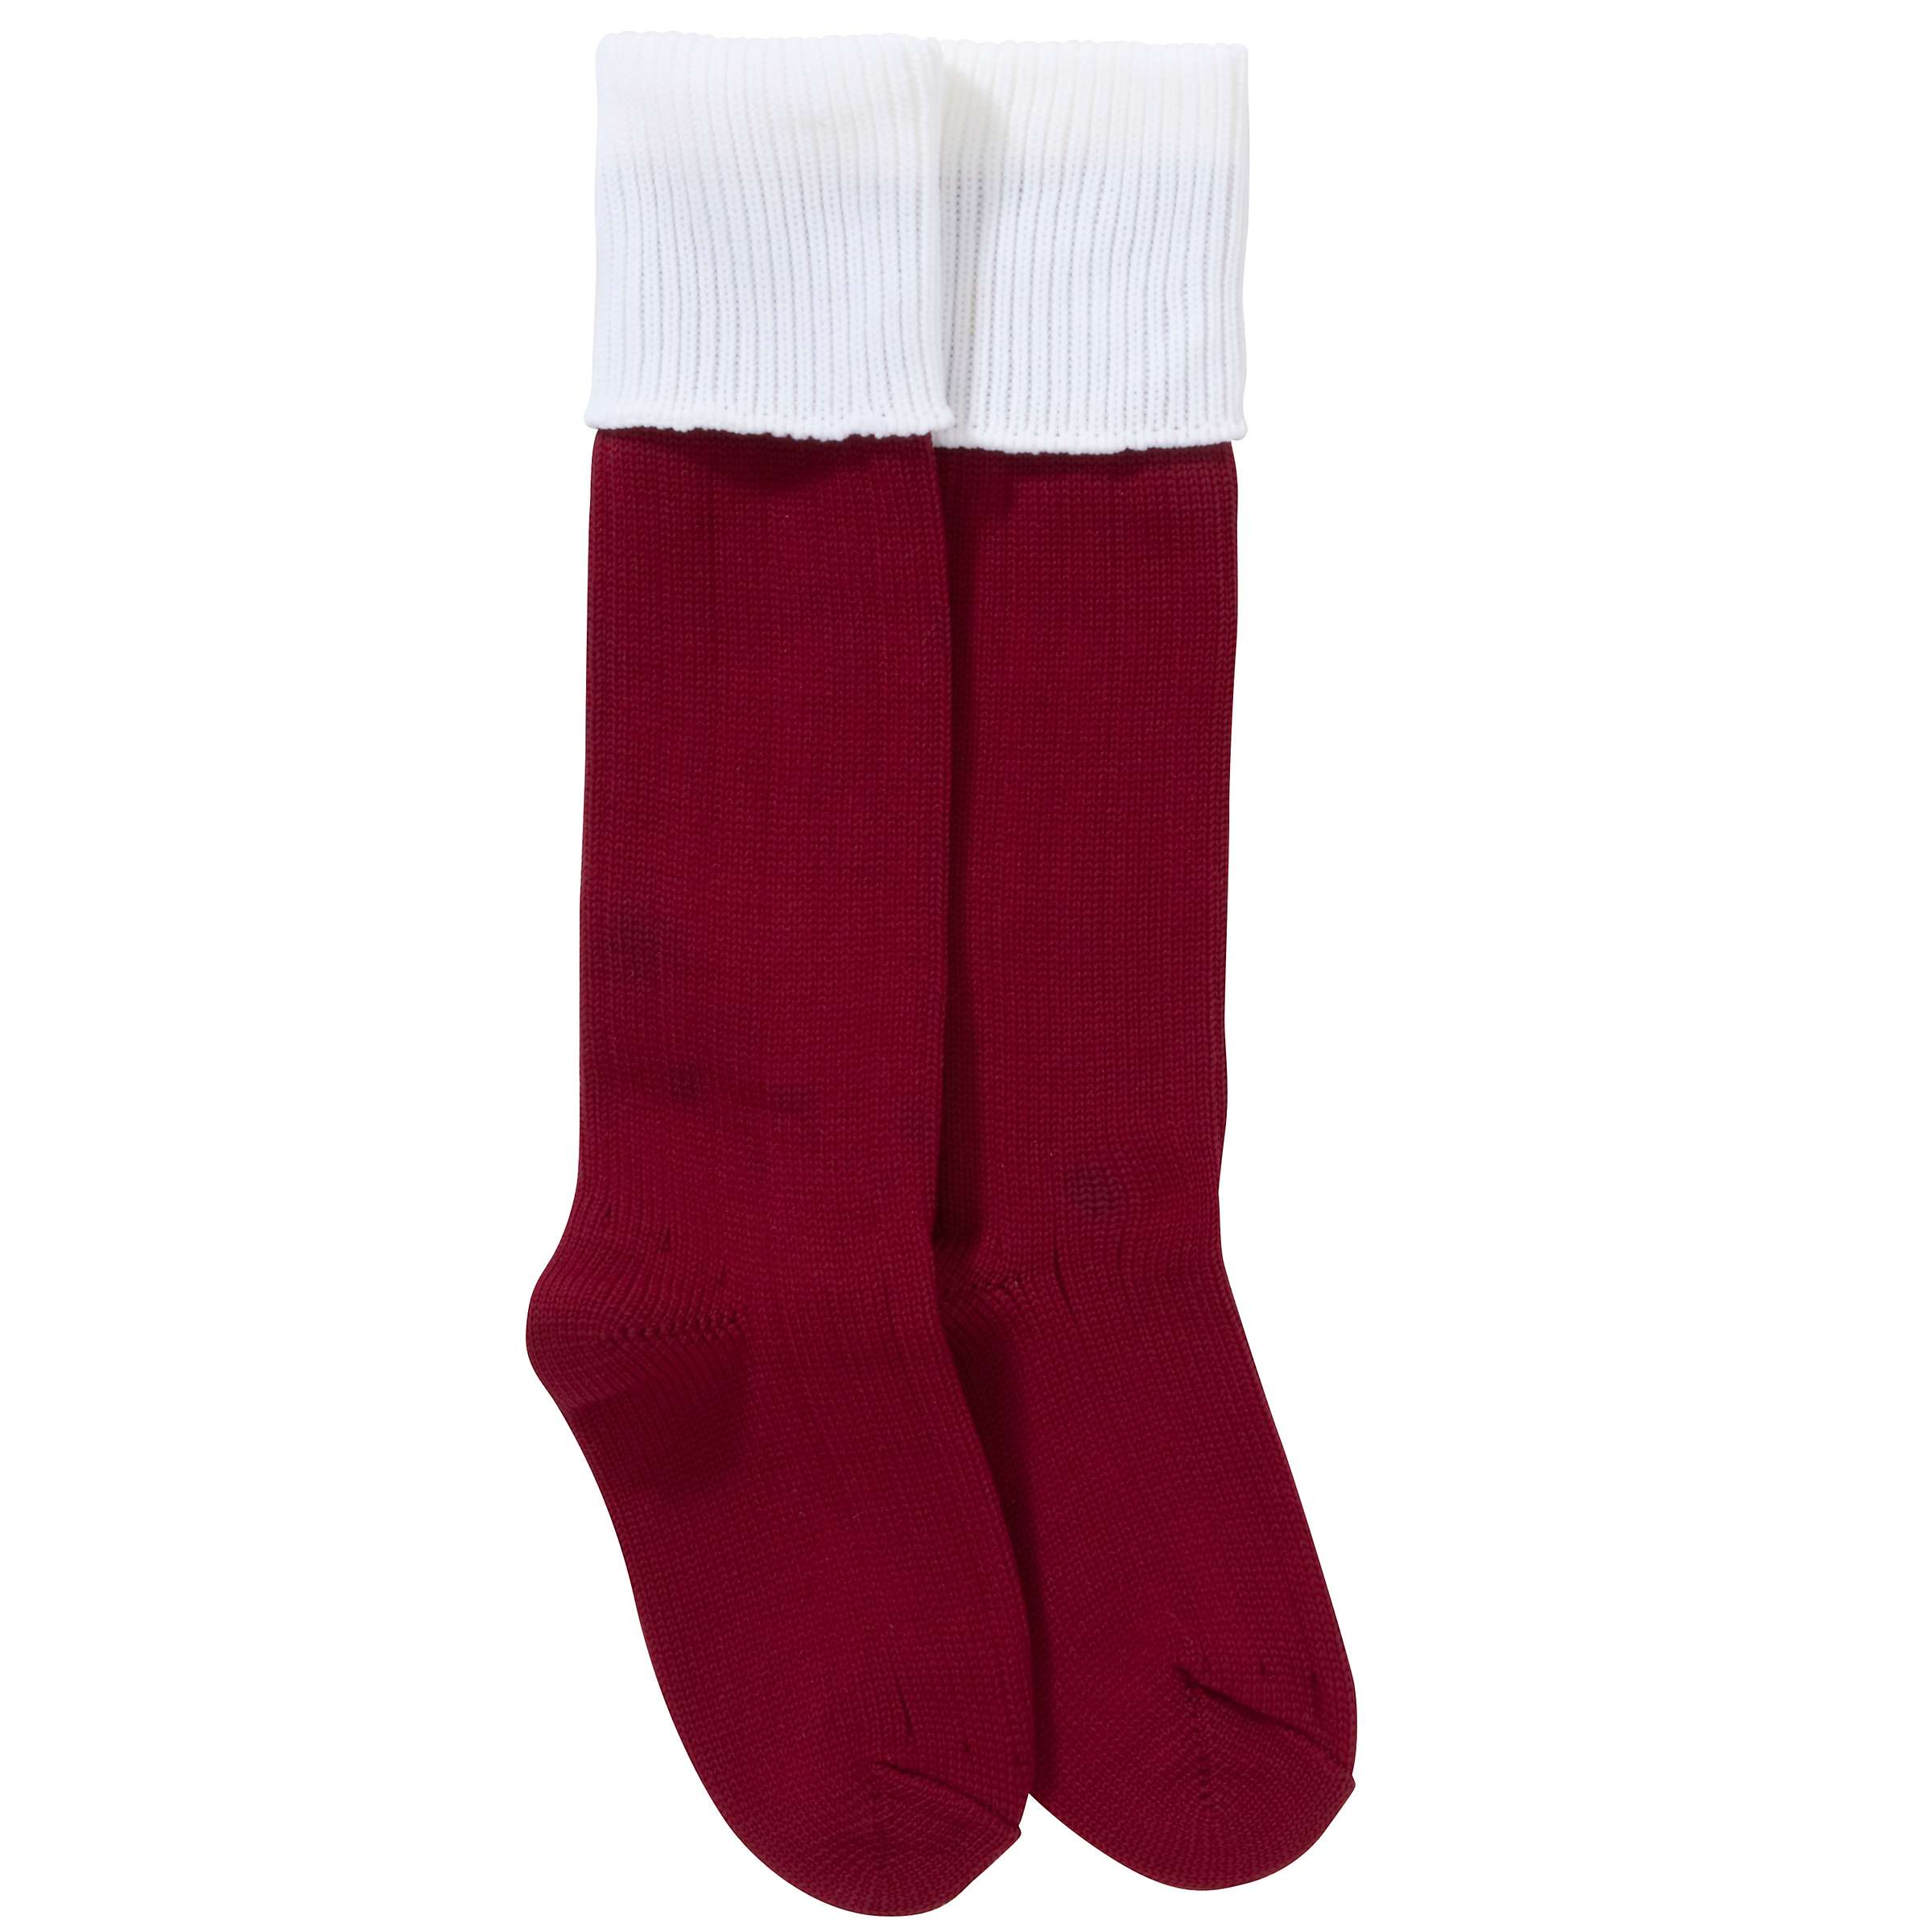 Buy Denstone College Preparatory School Boys' Sports Socks, Maroon/White Online at johnlewis.com